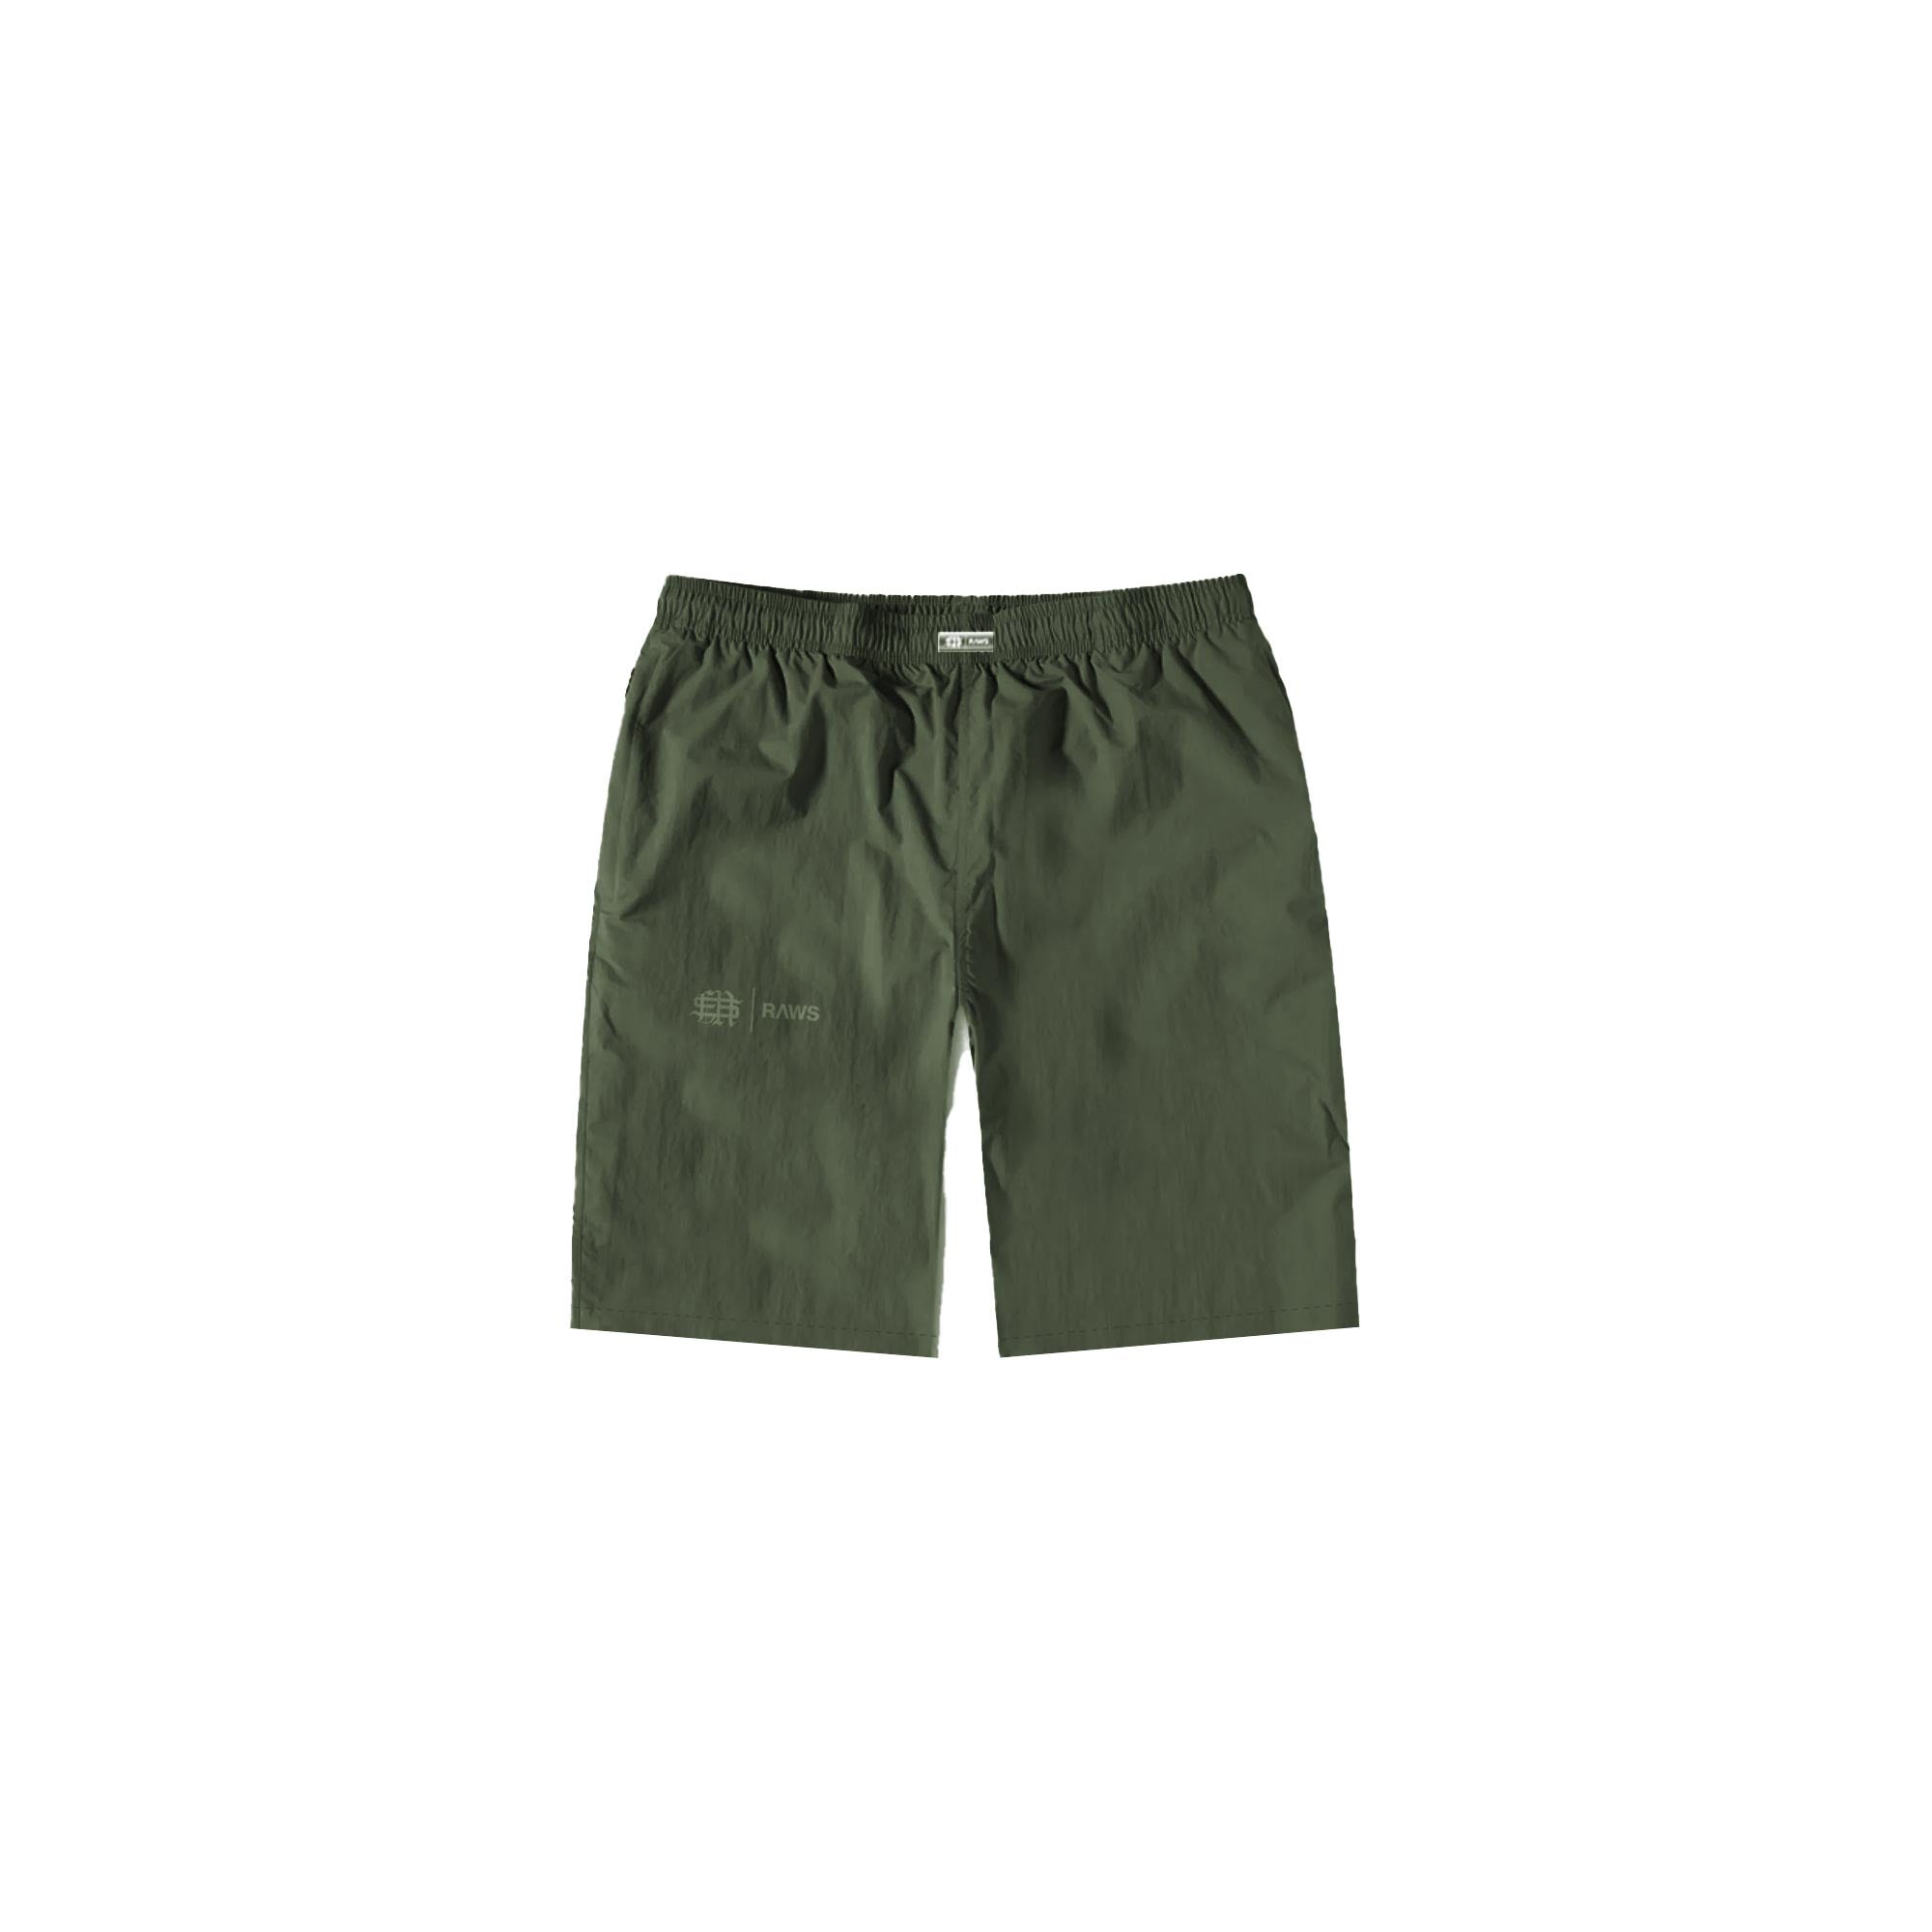 Sole et. Al RAWS Warm Up Track Shorts : Khaki grøn